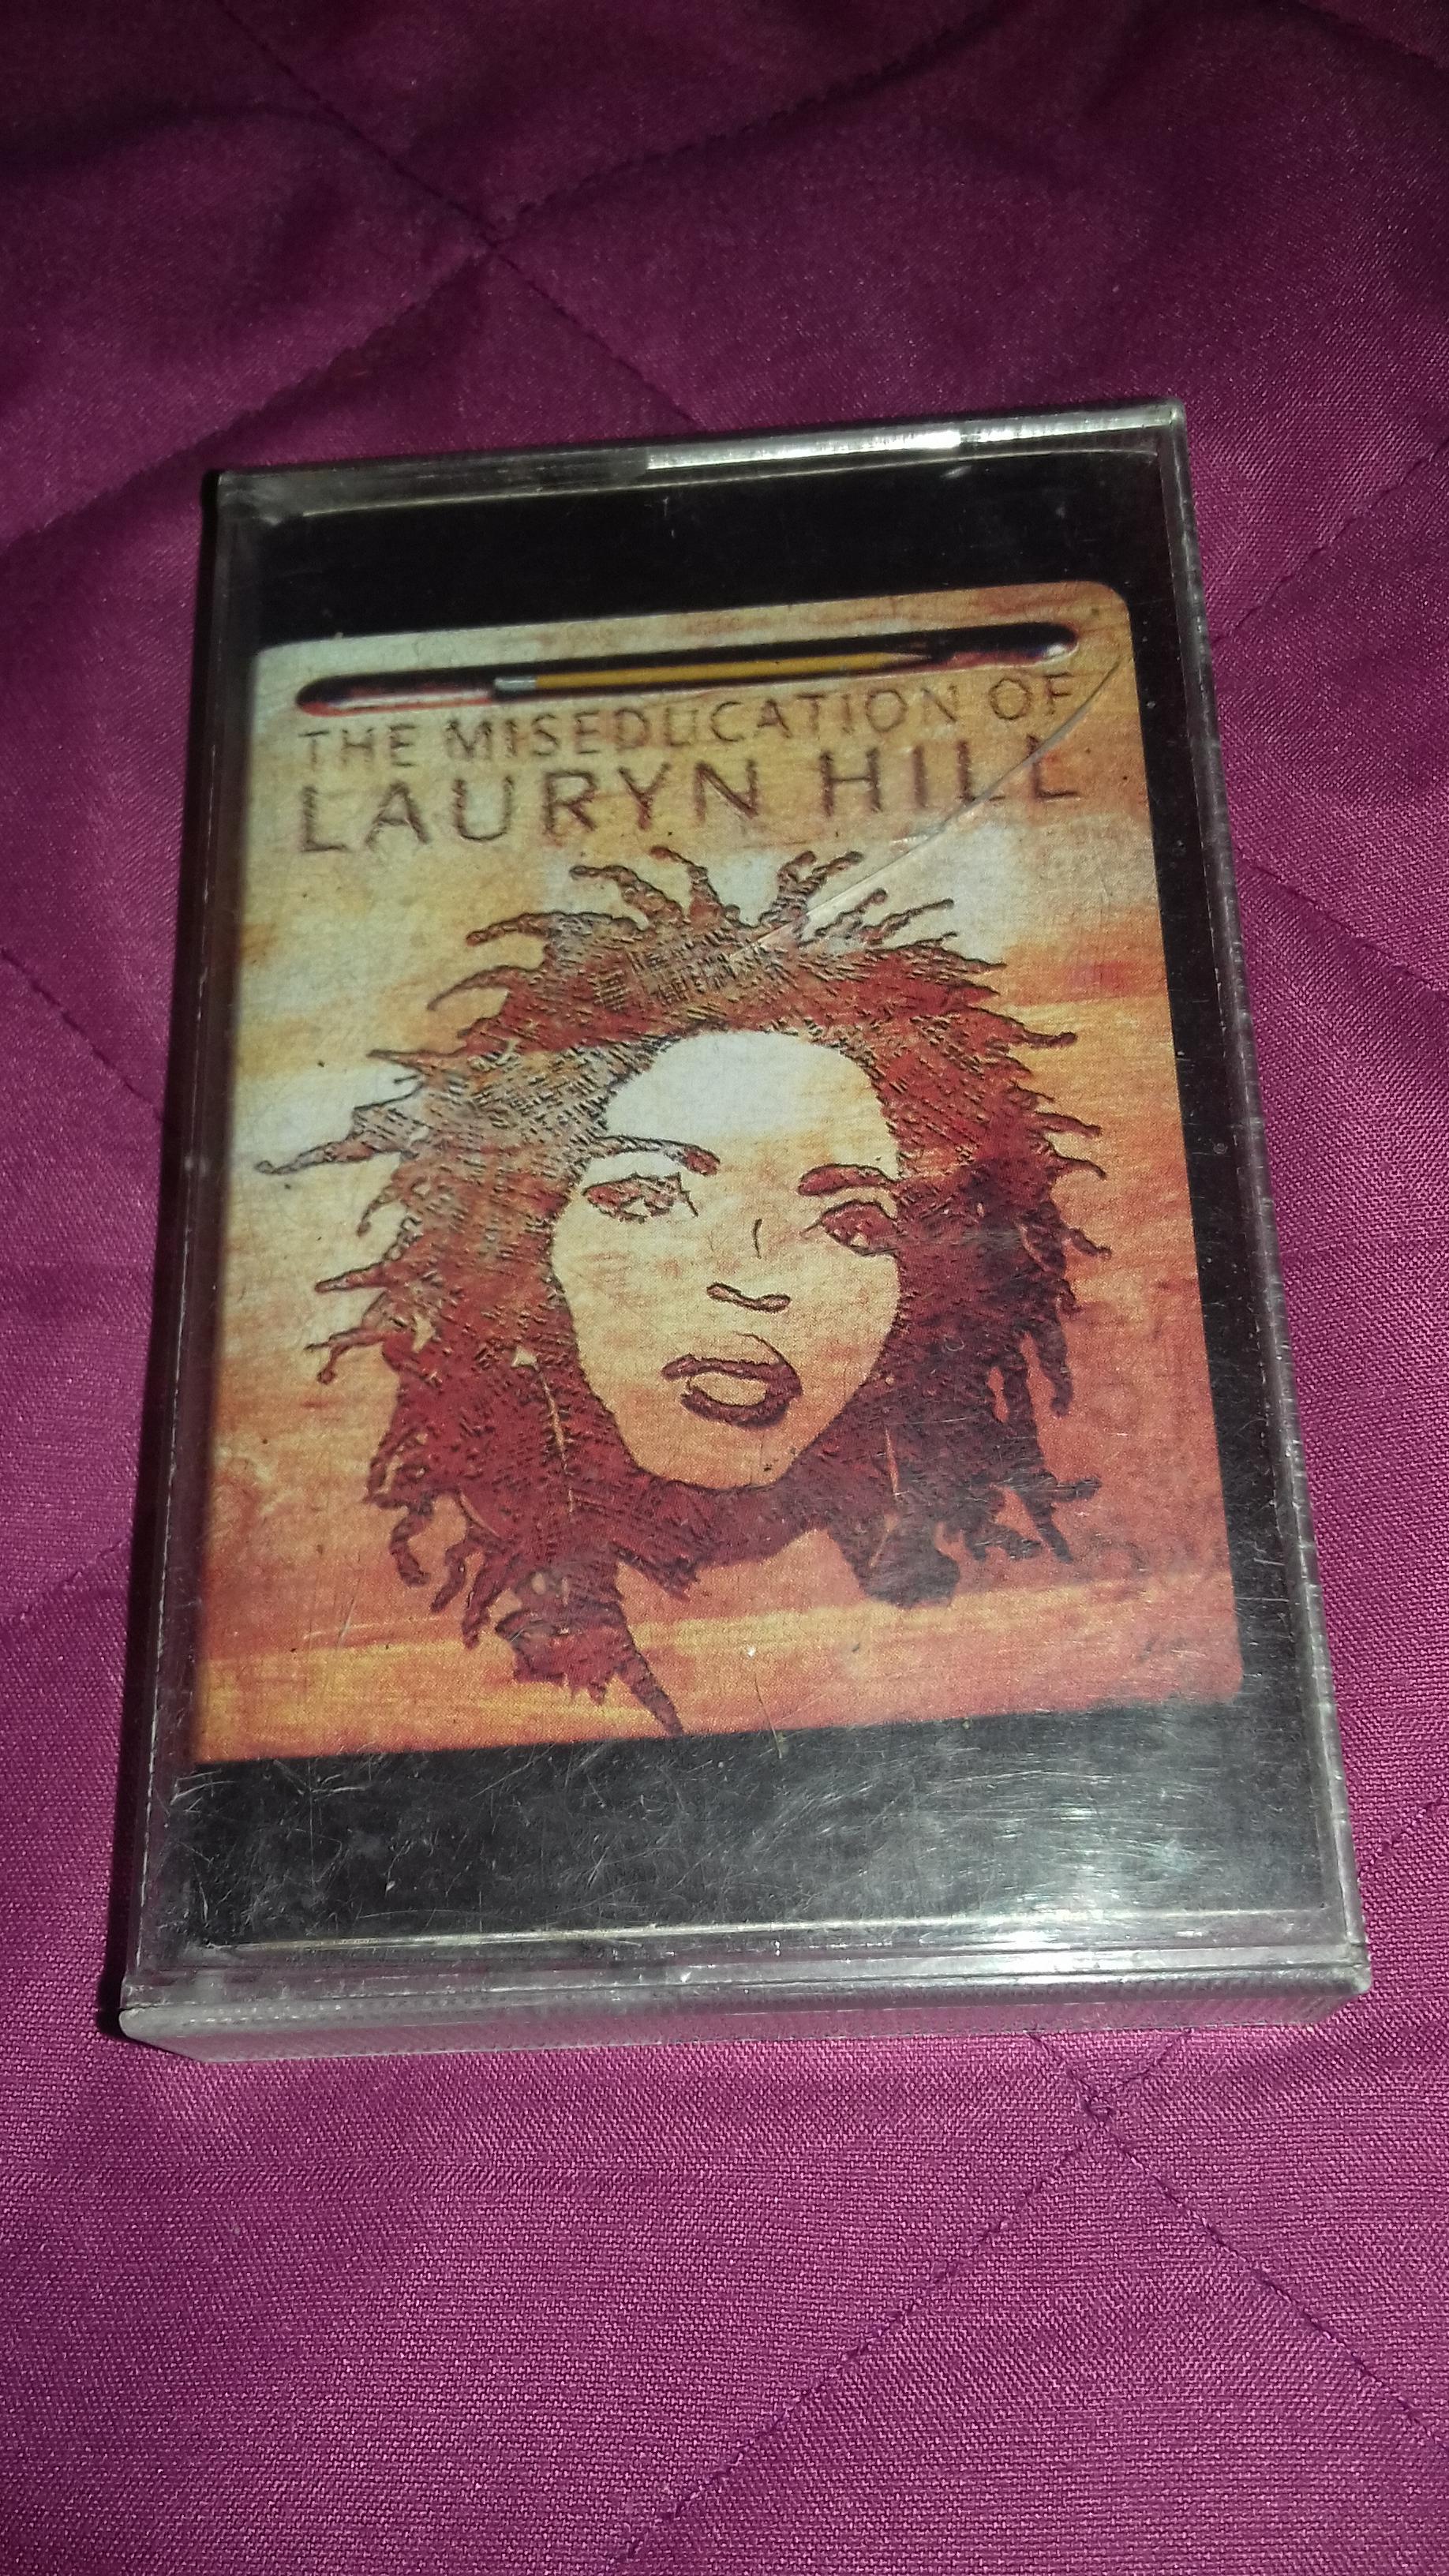 troc de troc cassette audio lauryn hill image 0